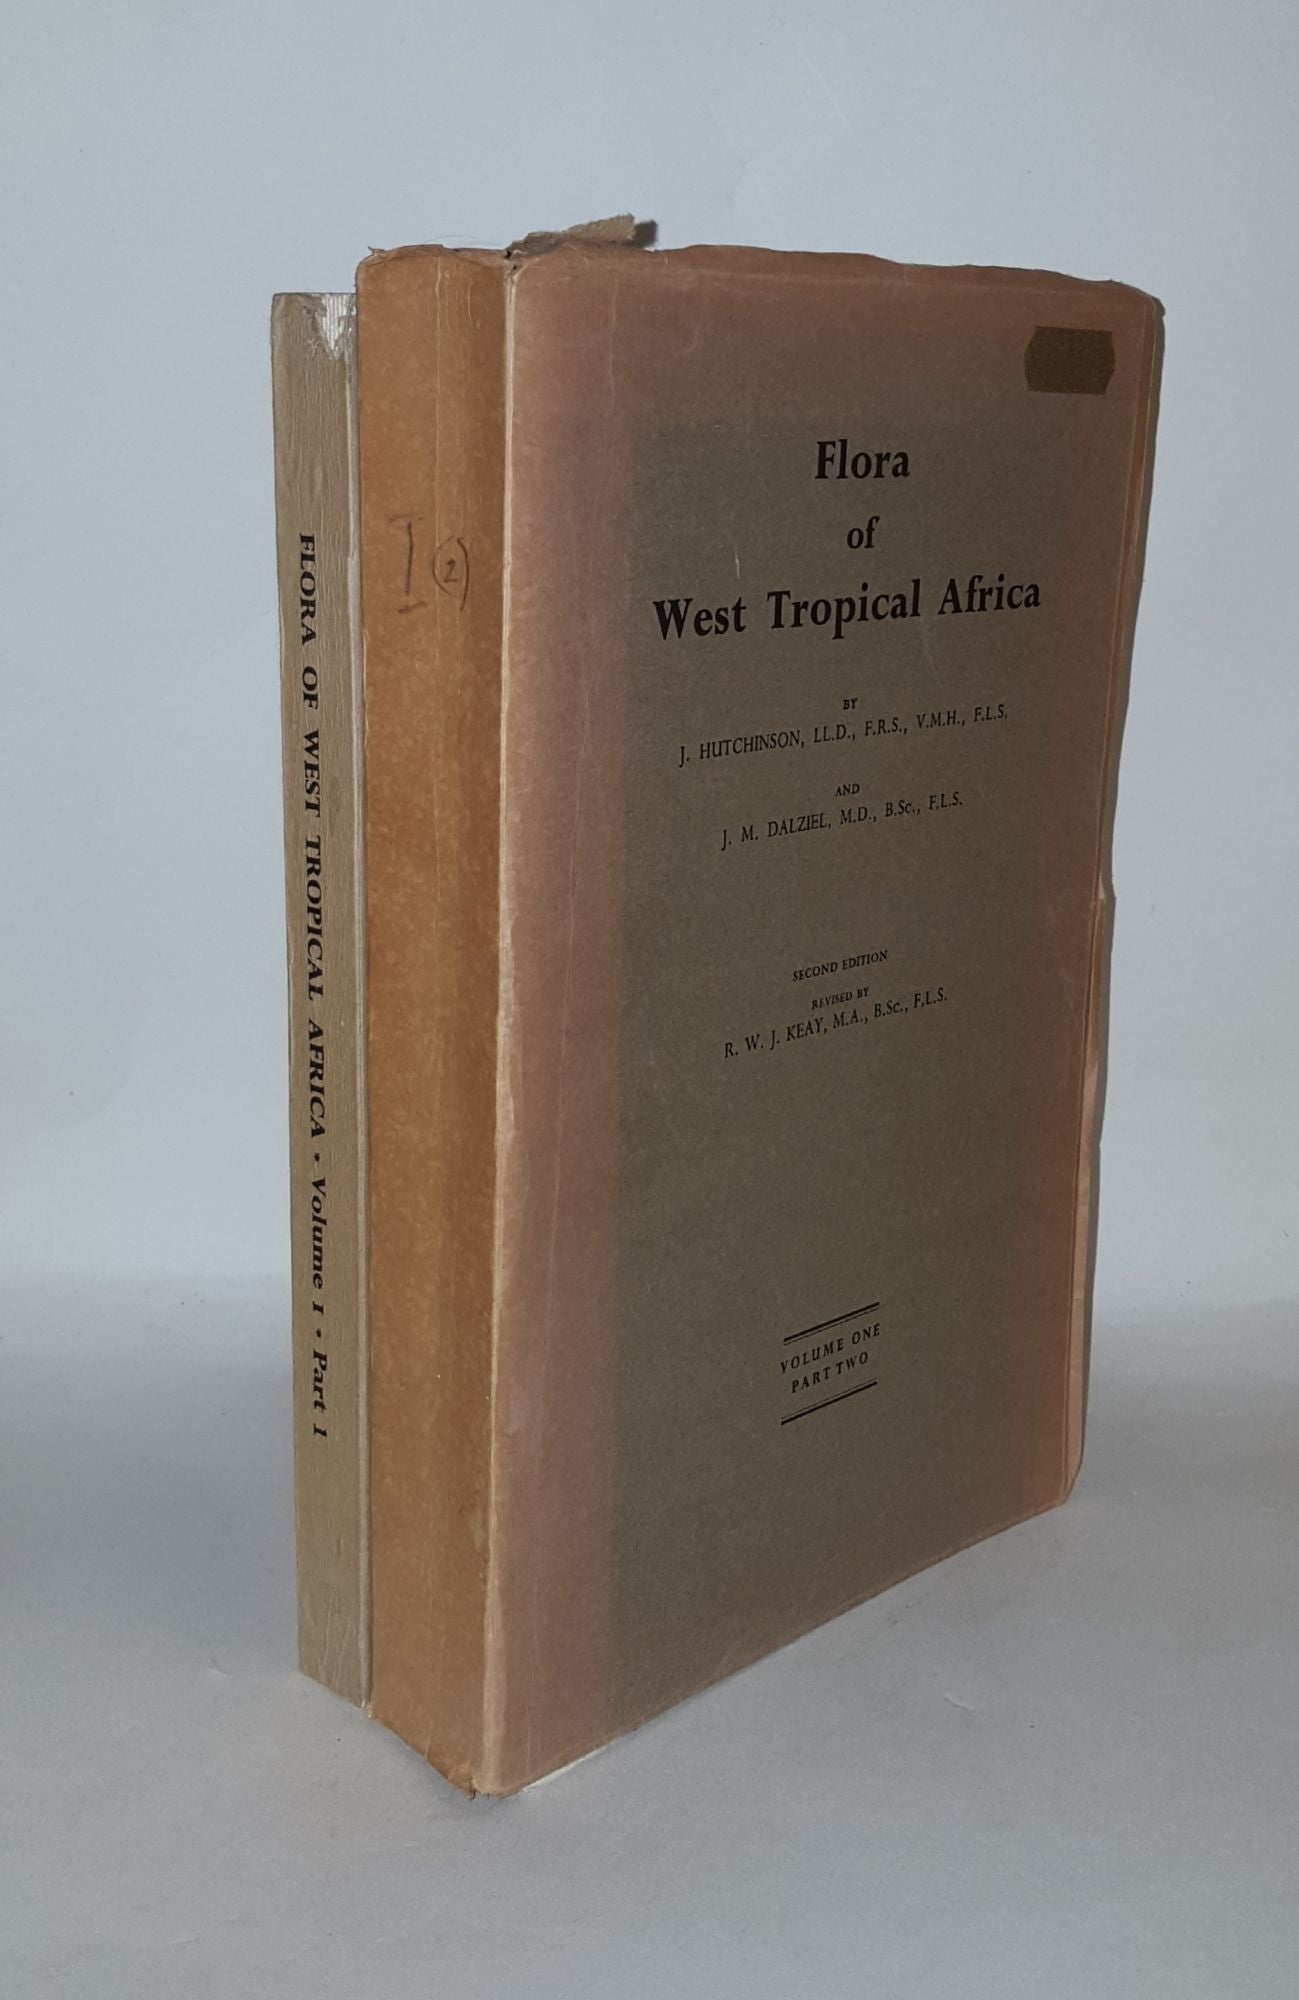 HUTCHINSON J., DALZIEL J.M. - Flora of West Tropical Africa Volume I Parts I & II